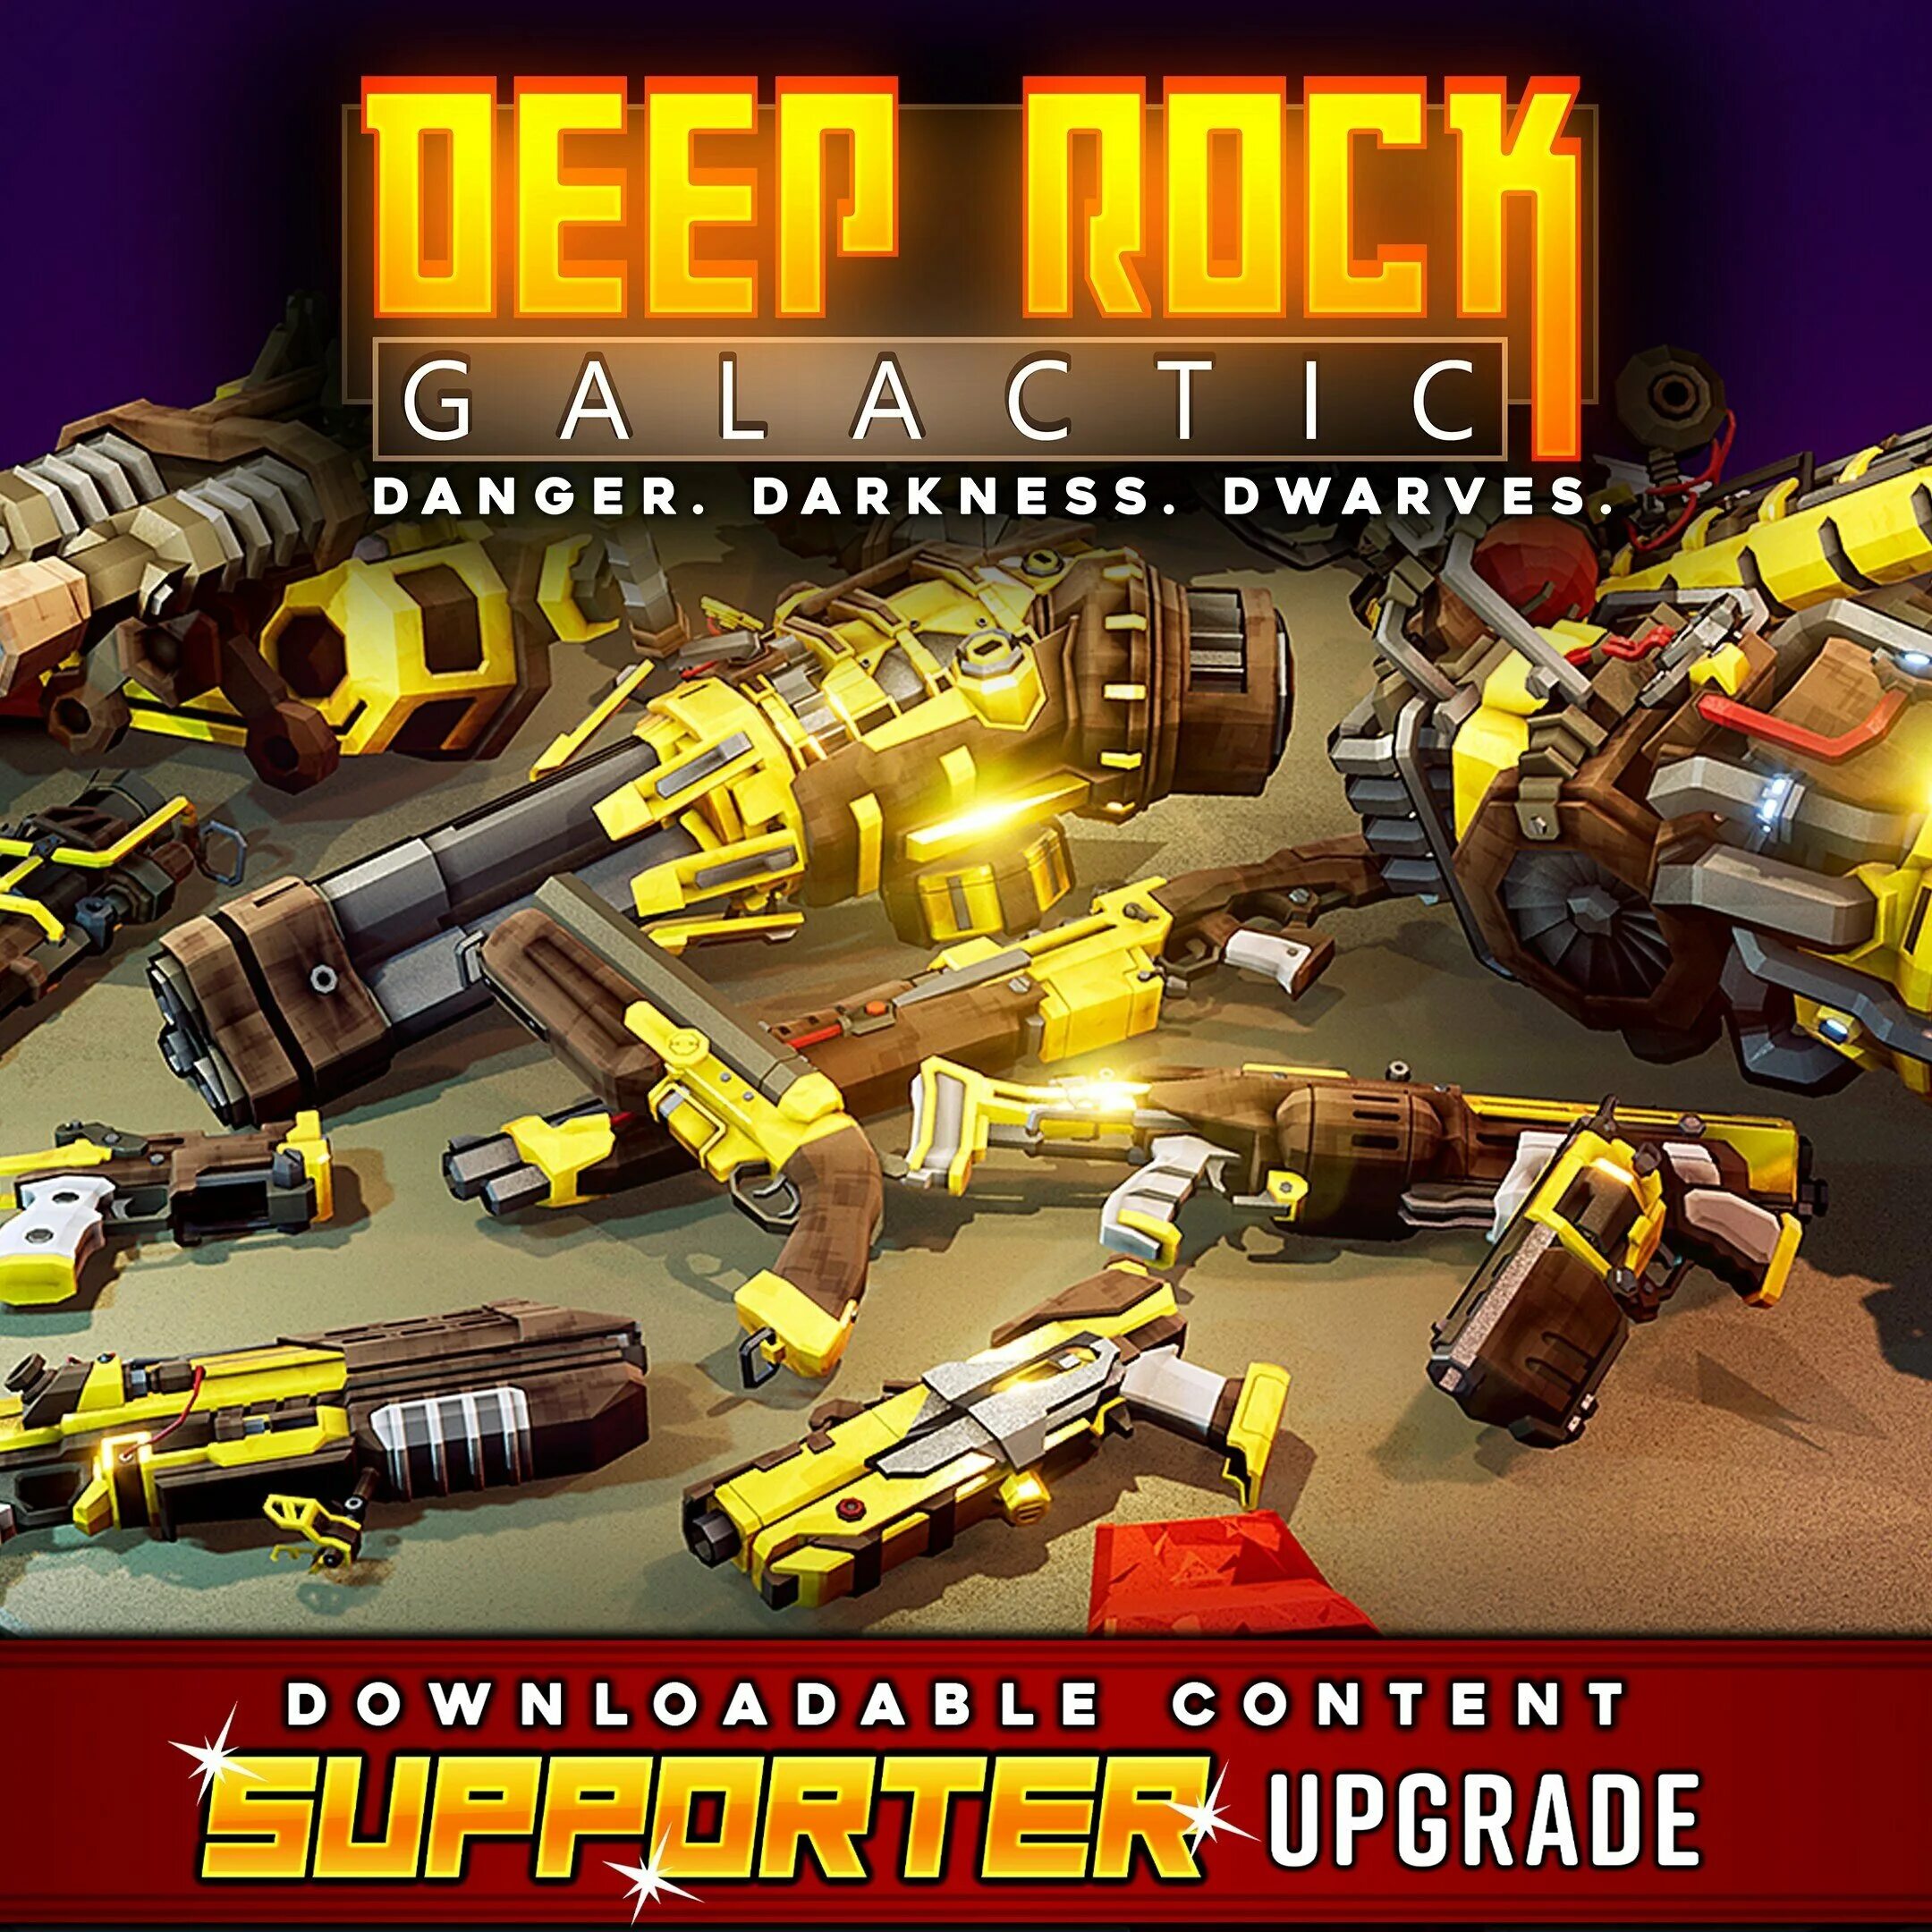 Deep Rock Galactic Rival Tech Pack. Deep Rock Galactic фигурки. Deep Rock Galactic supporter upgrade. Deep Rock Galactic Xbox one x|s. Deep rock galactic обновление